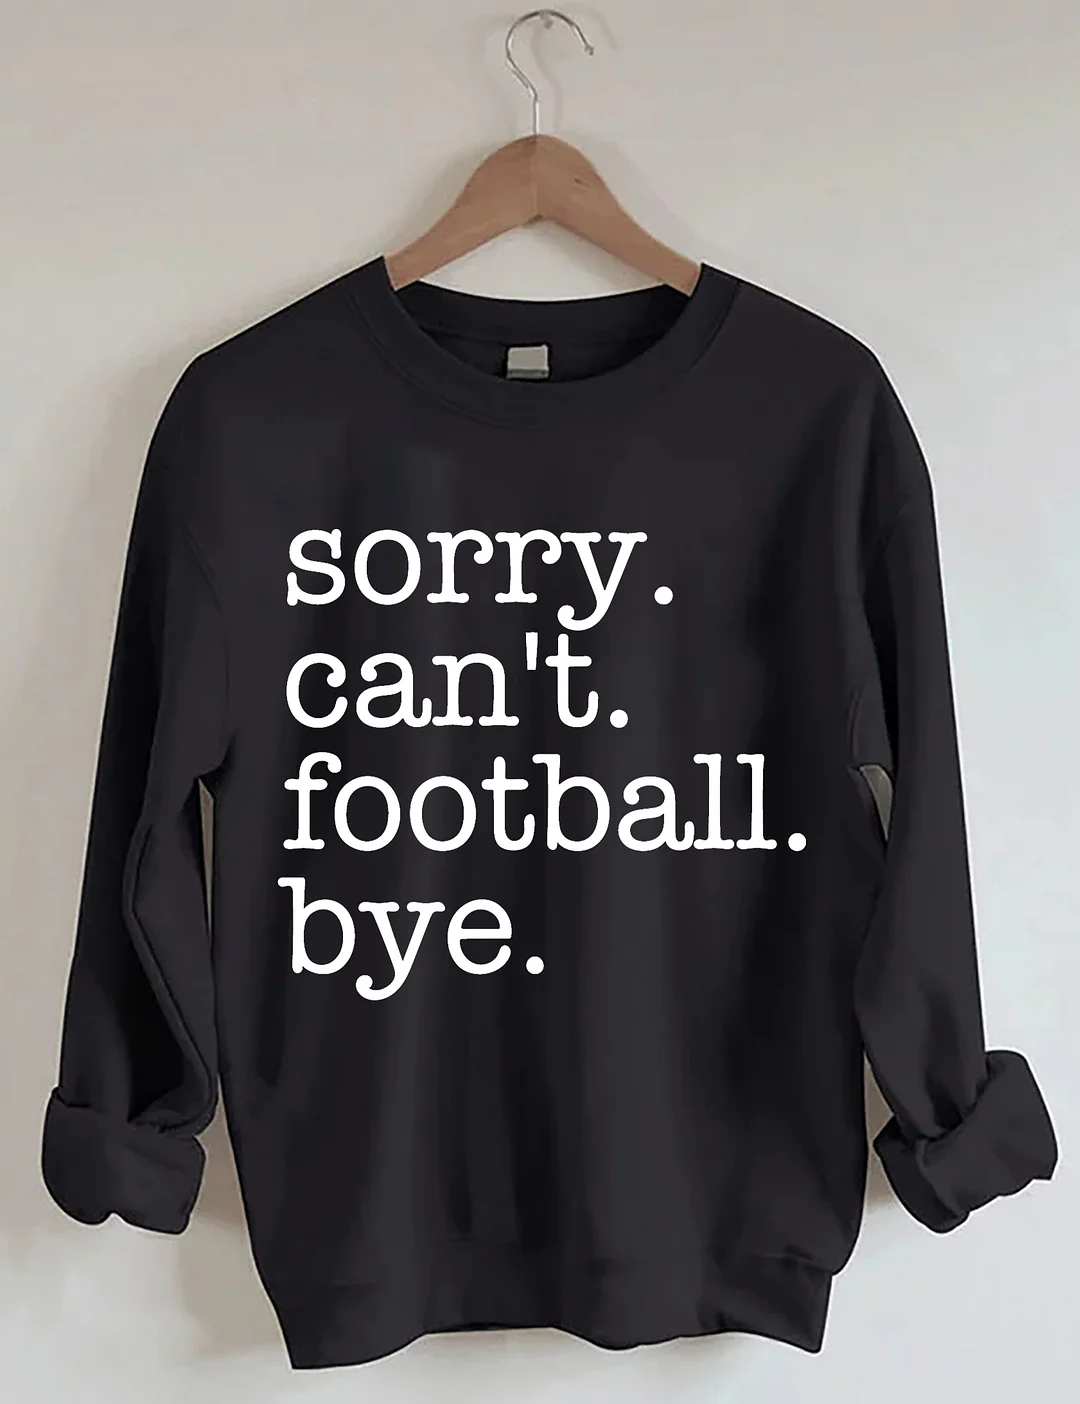 Sorry Can't Football Bye Sweatshirt